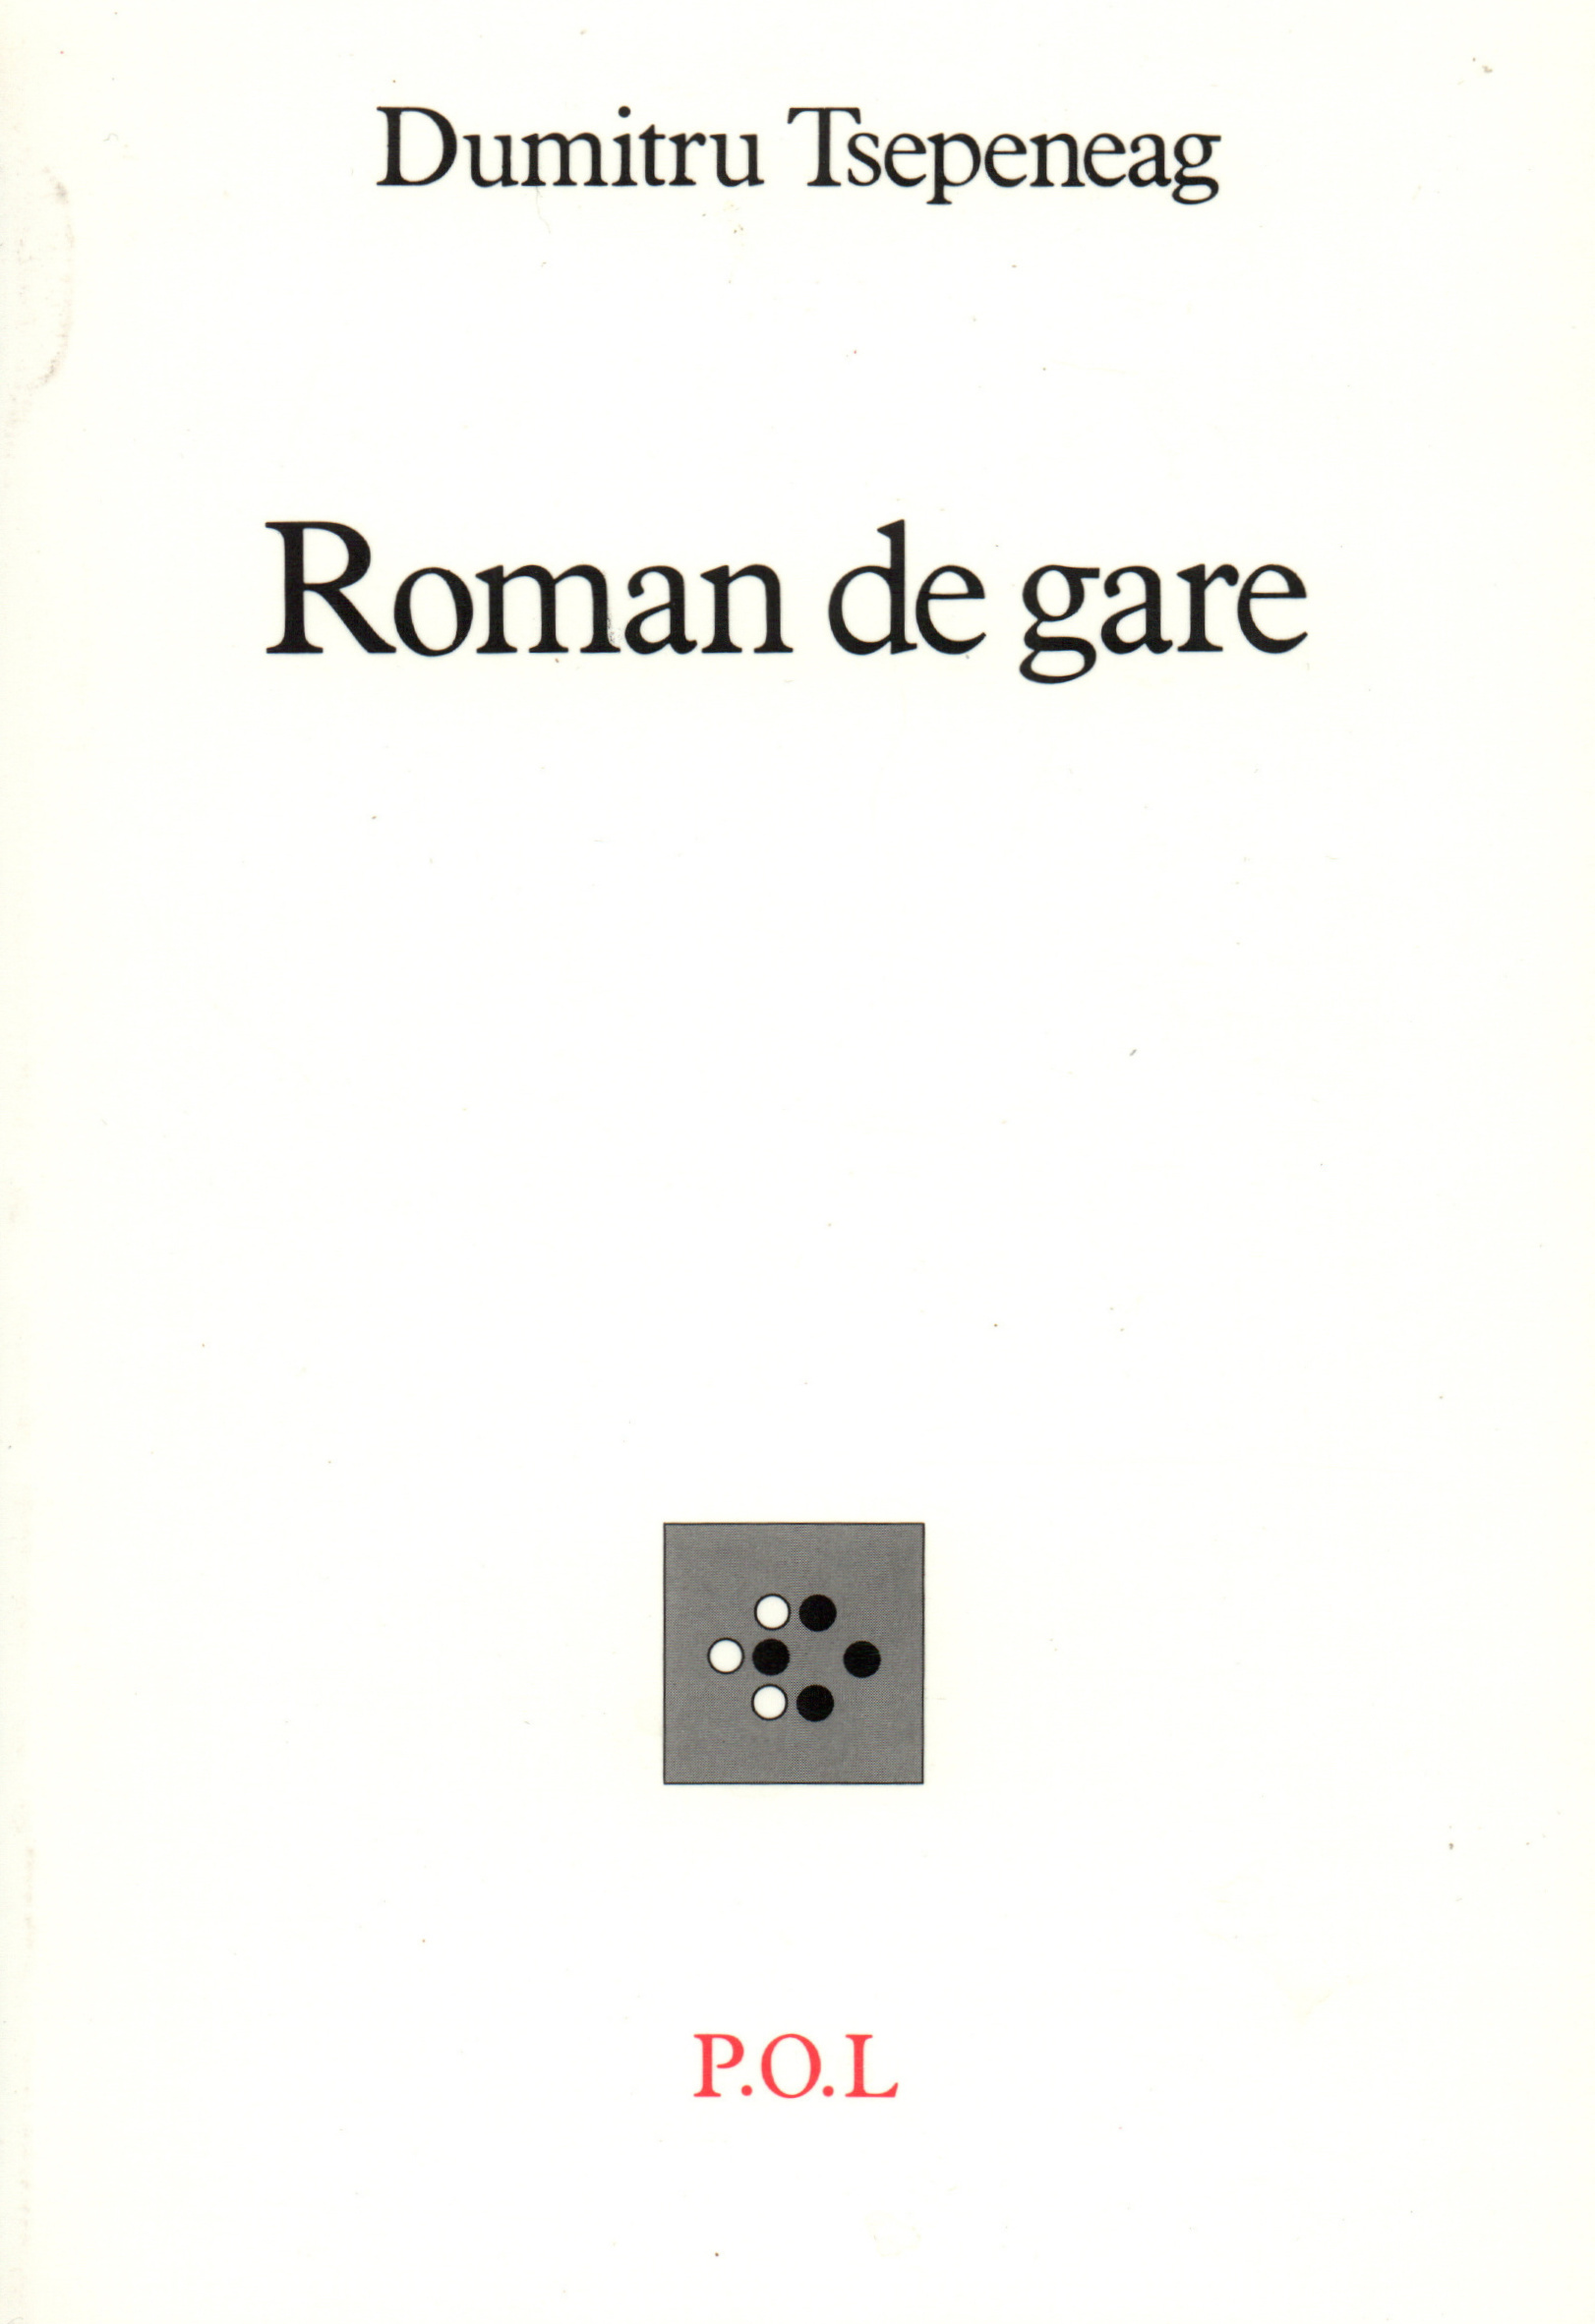 Roman de gare (9782867440496-front-cover)